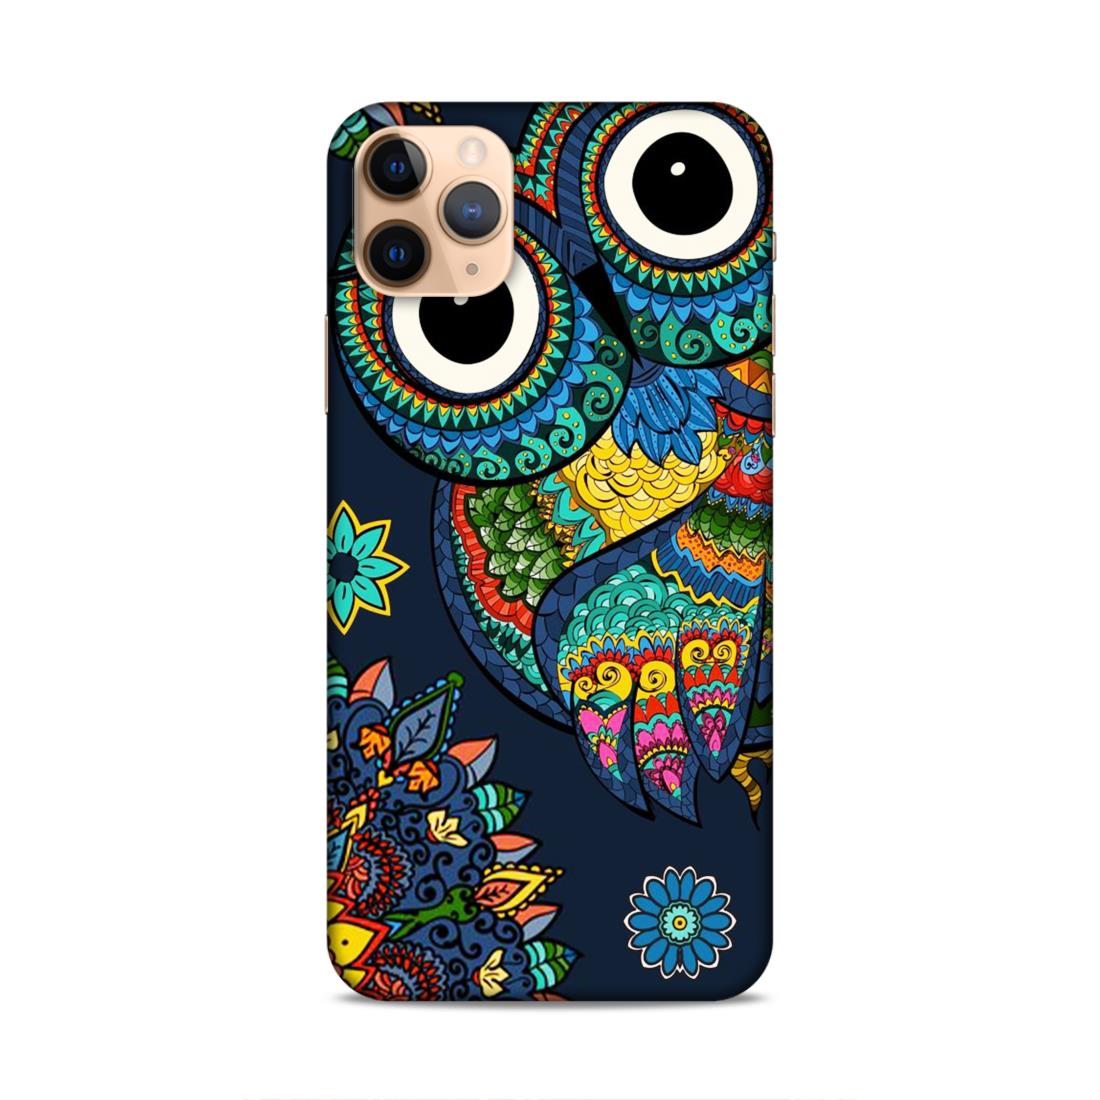 Owl and Mandala Flower Hard Back Case For Apple iPhone 11 Pro